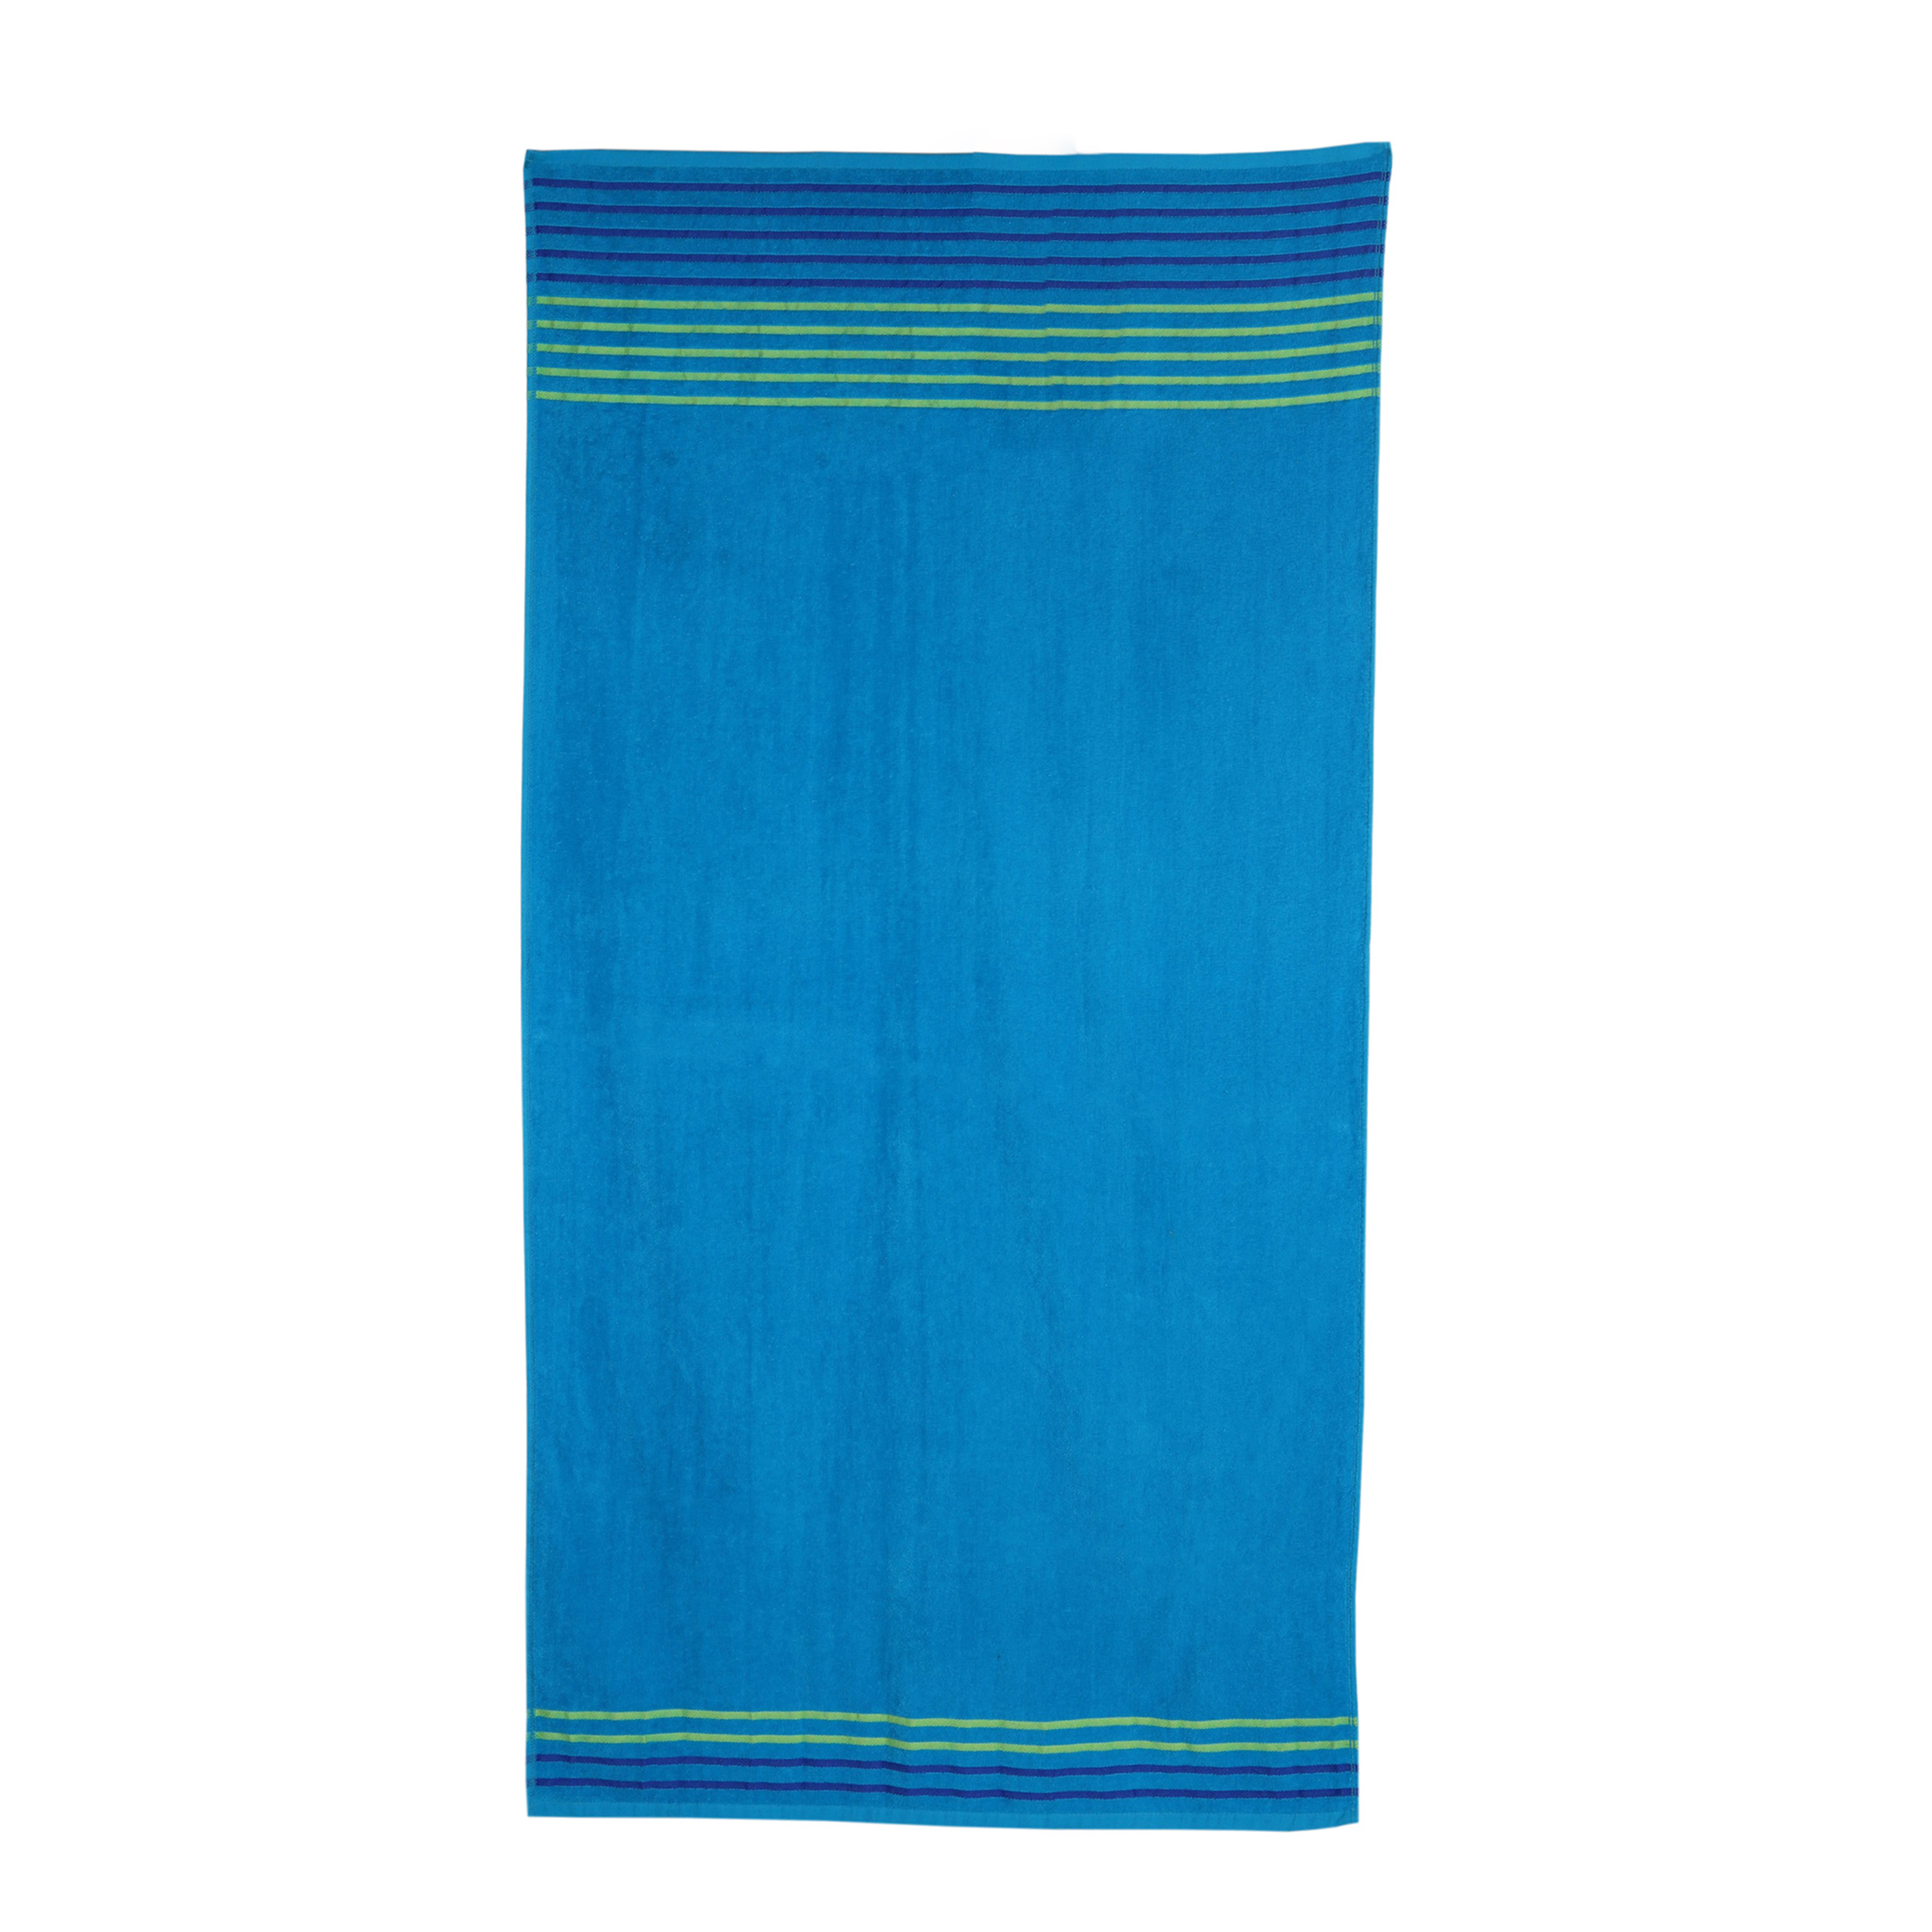 Disney Stitch Floral Cotton Bath and Beach Towel Blue 58x28 Lilo